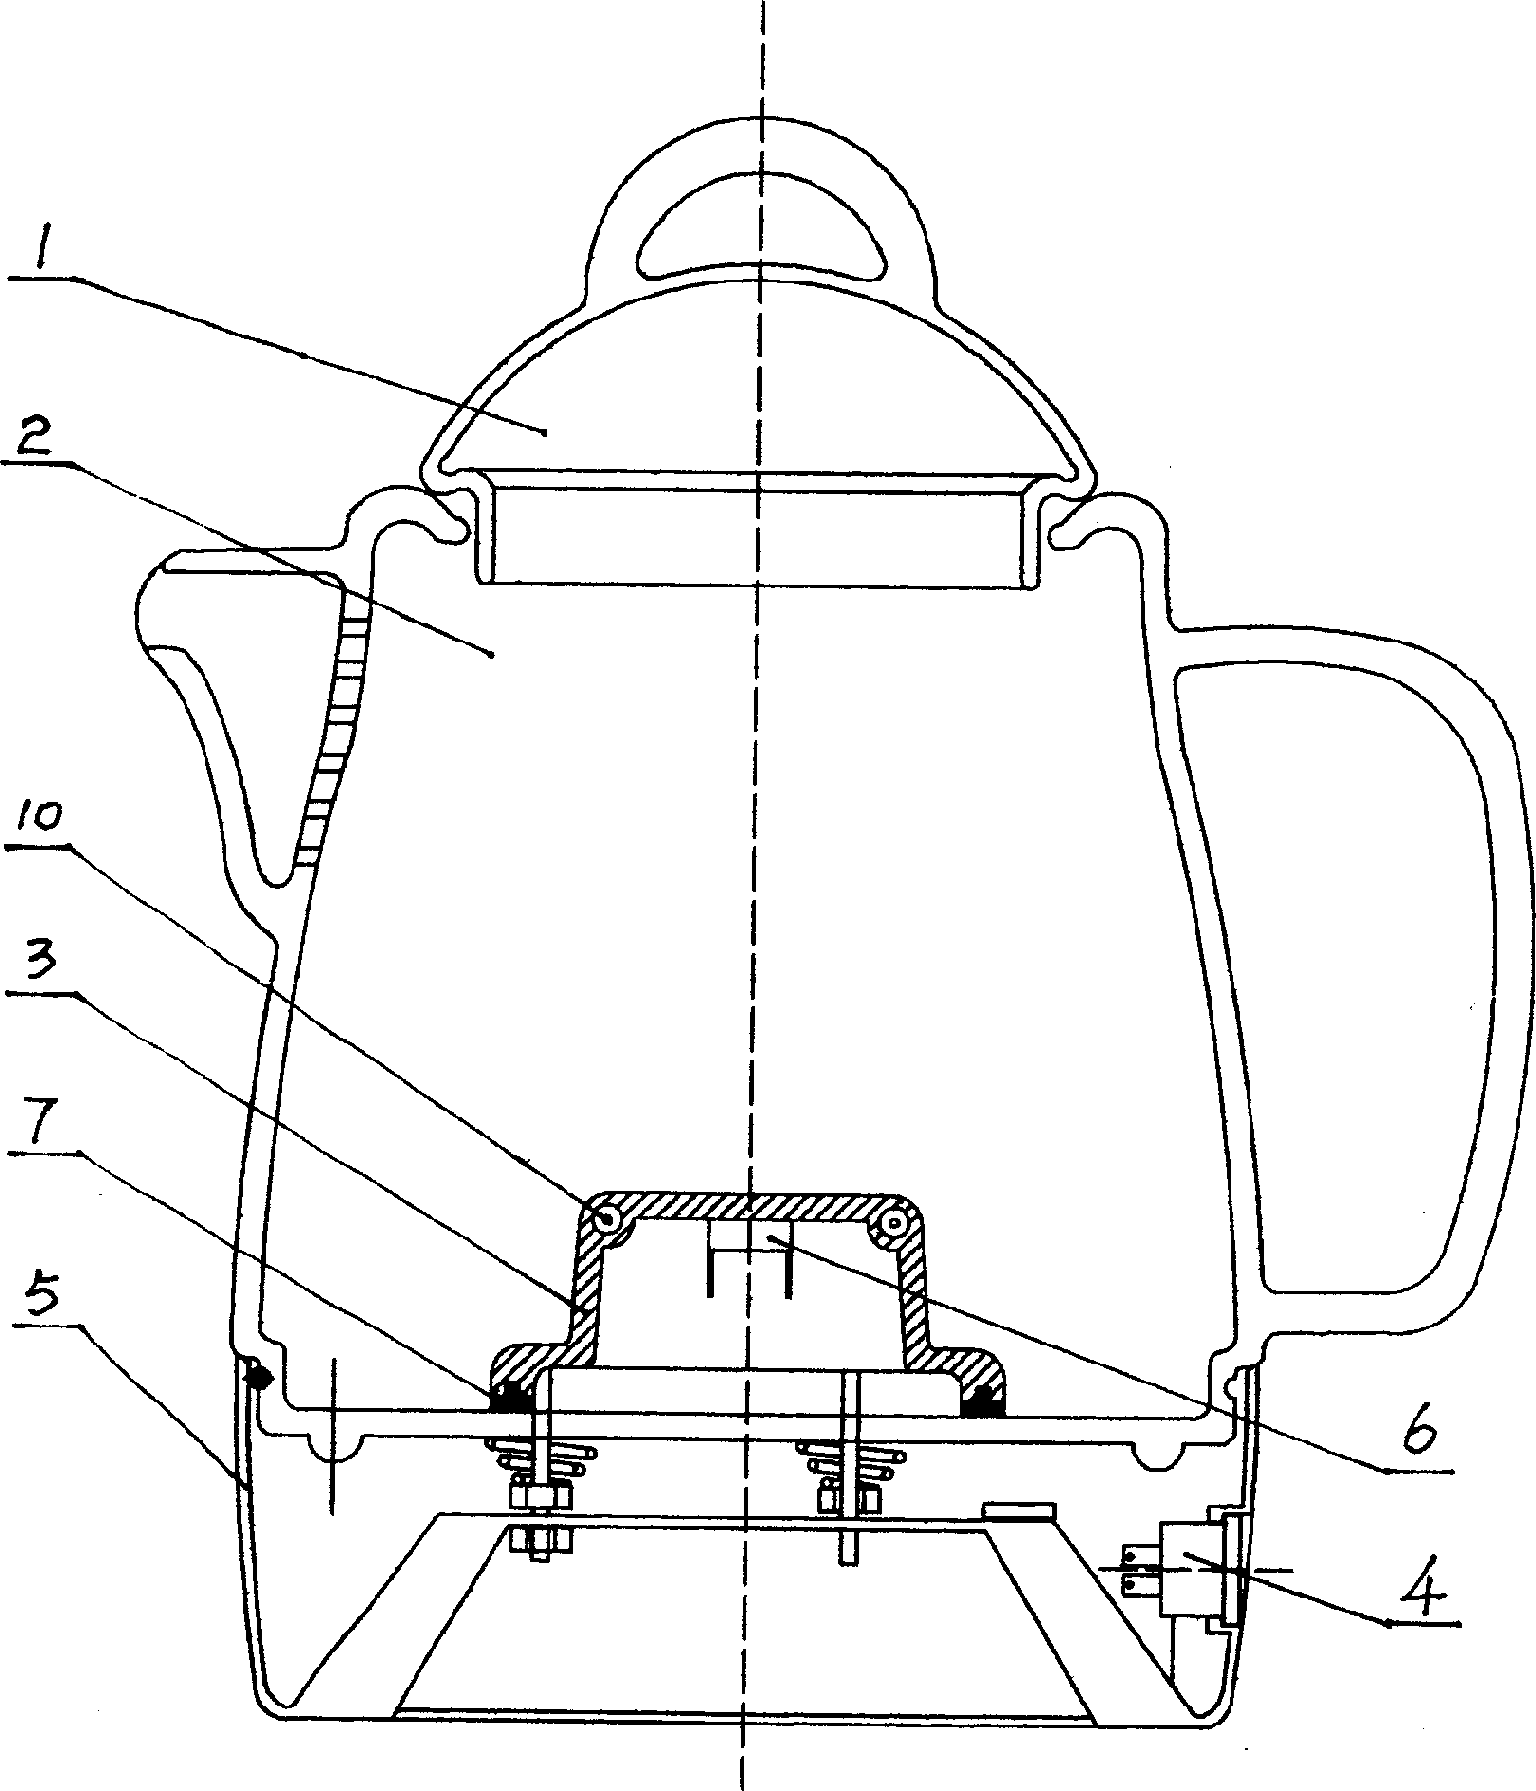 Electric medicine kettle capable of regulating residual medicine dose